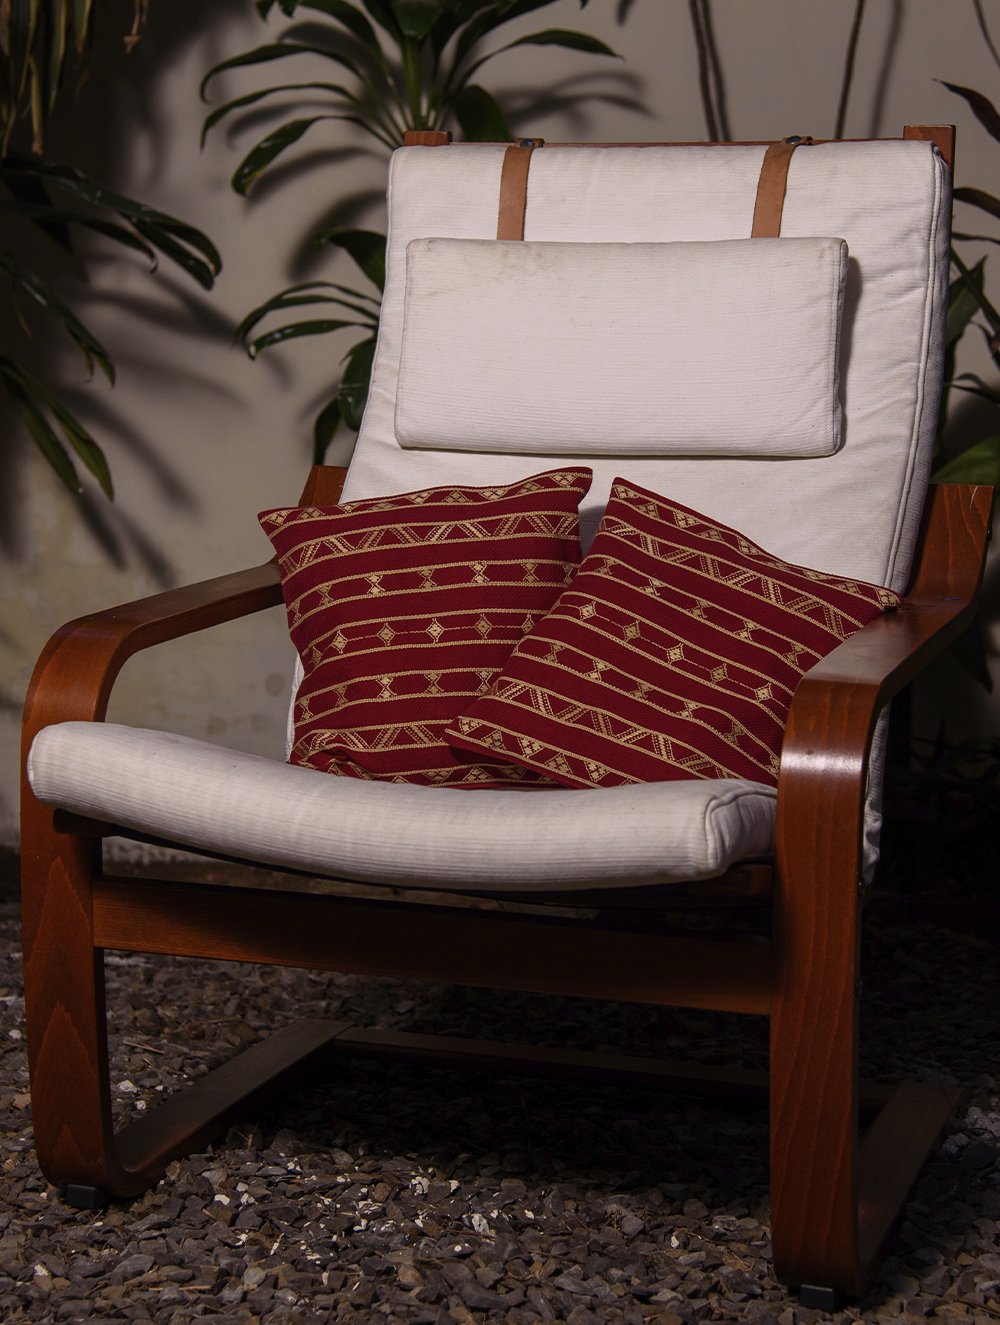 Load image into Gallery viewer, Kashida Pattu Woven Cushion Covers - Maroon (Small, Set of 2)